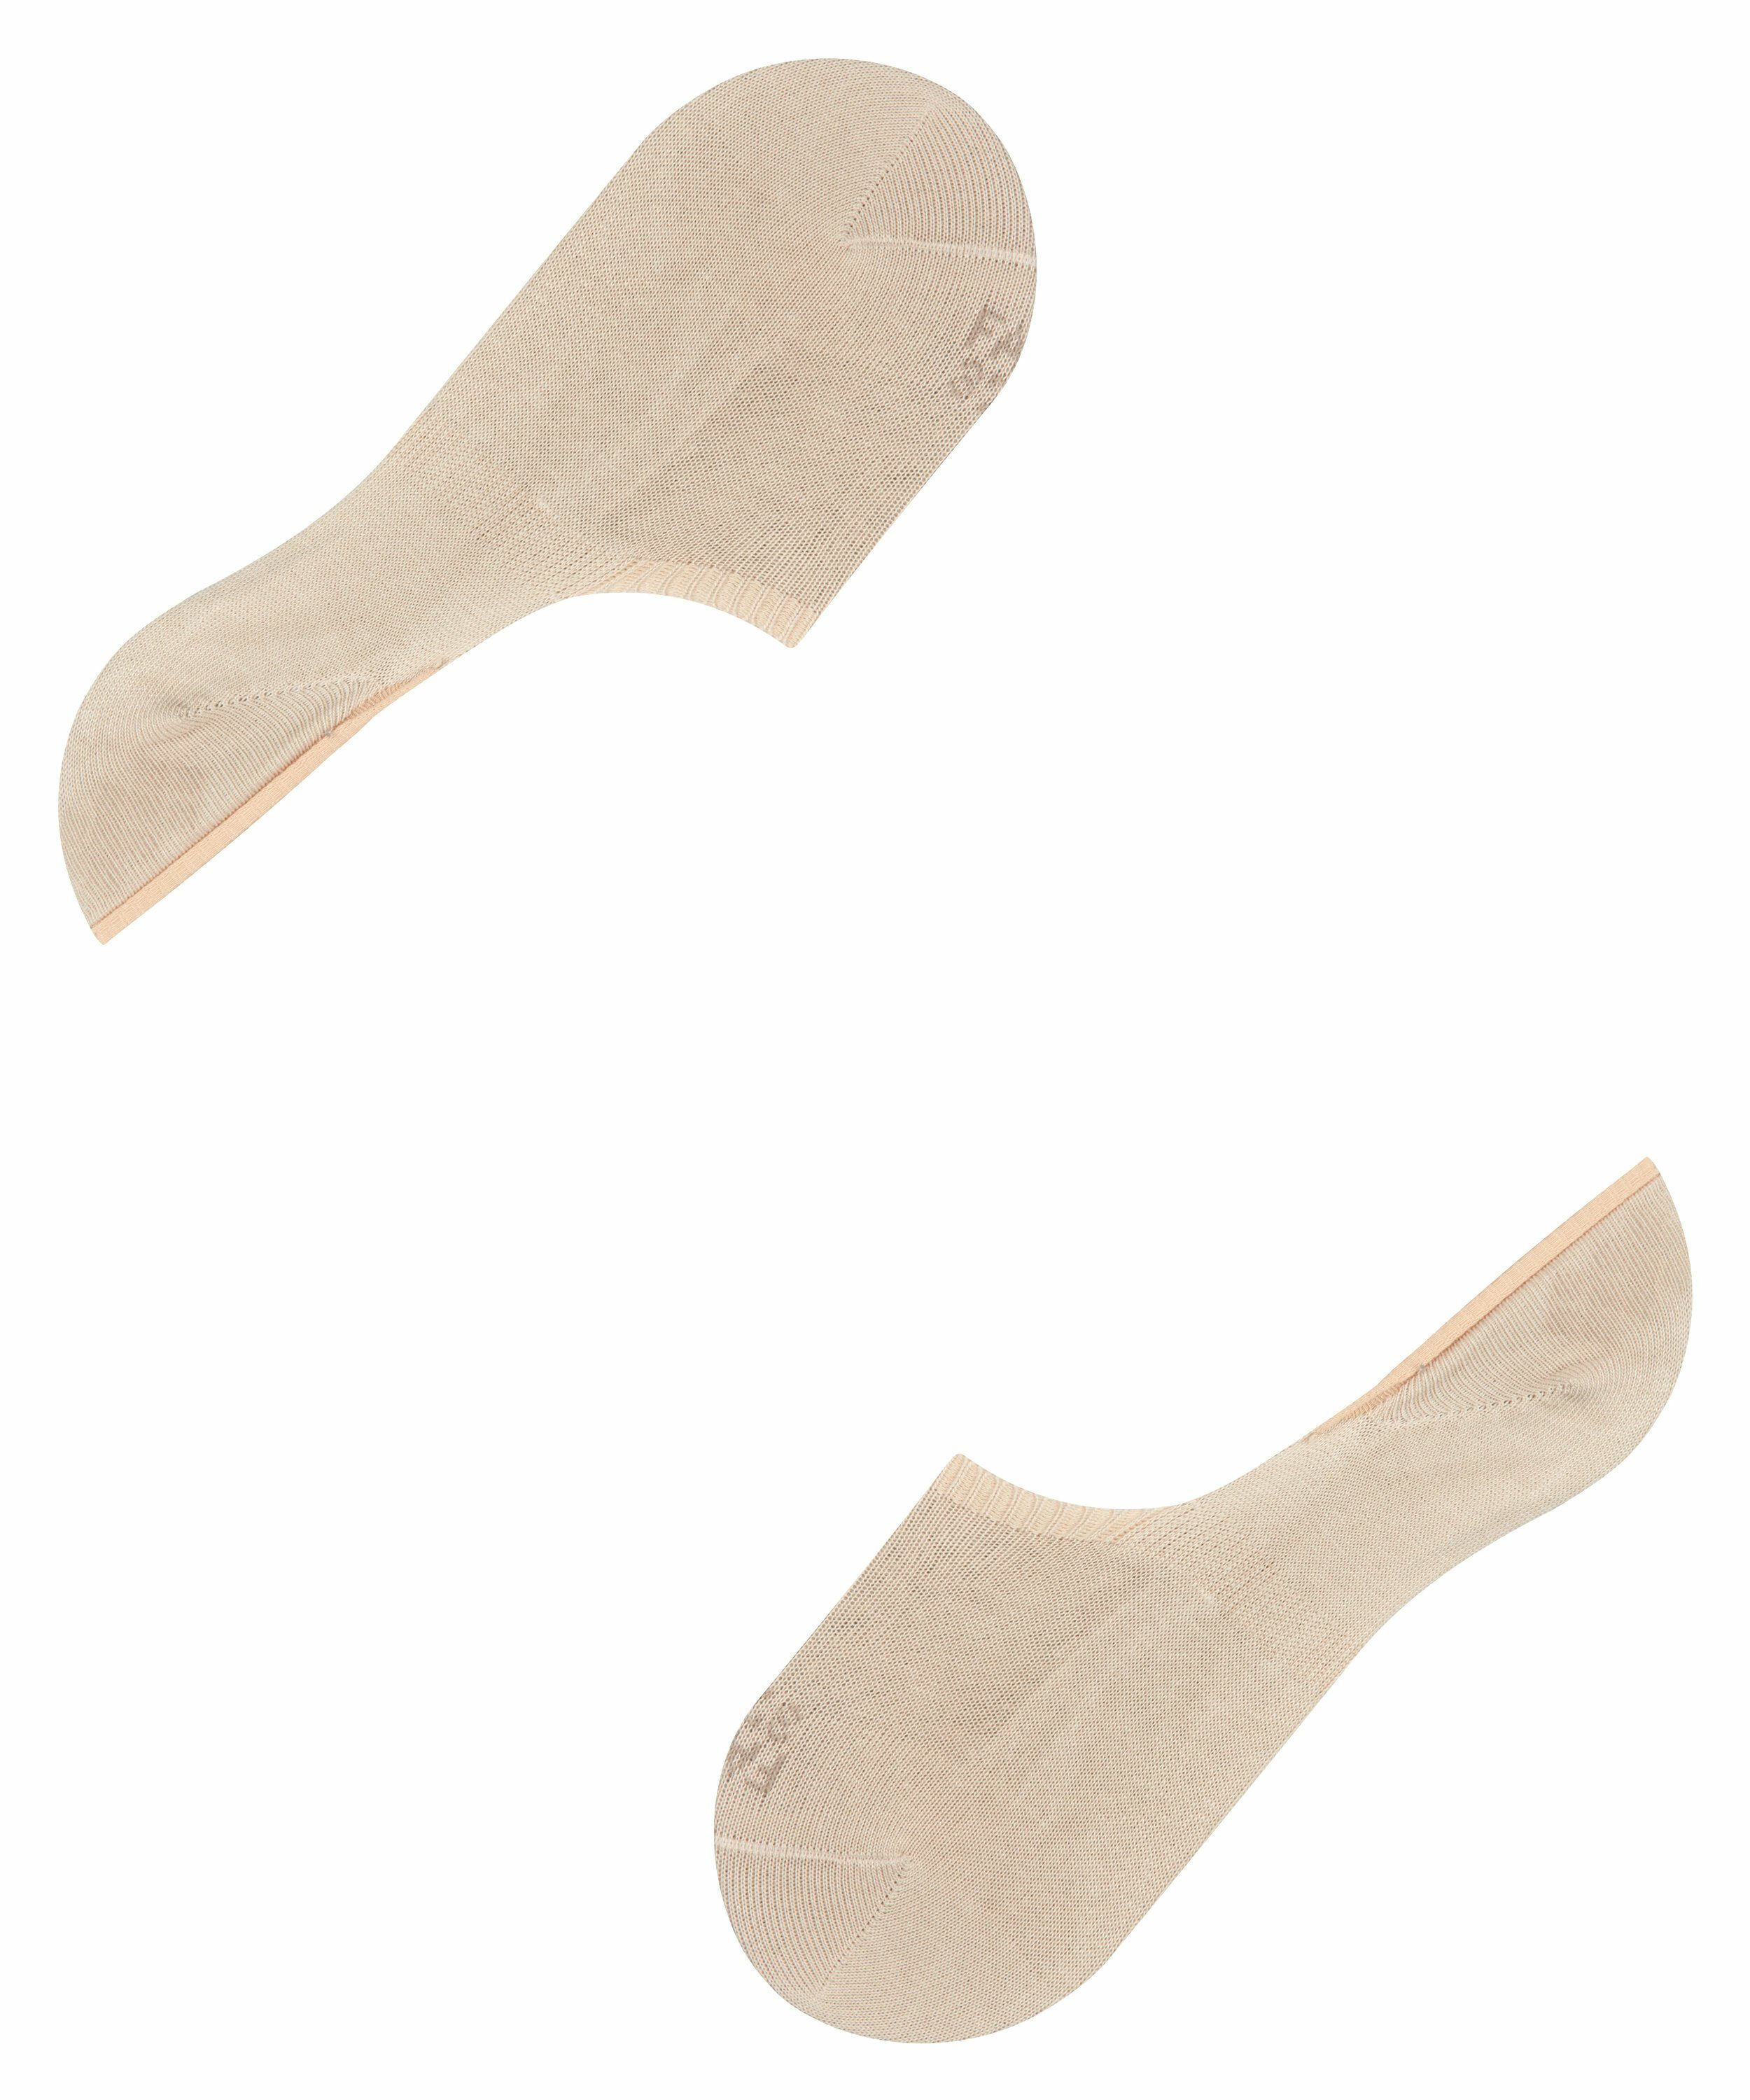 FALKE Füßlinge Anti-Slip-System (4019) cream mit Step